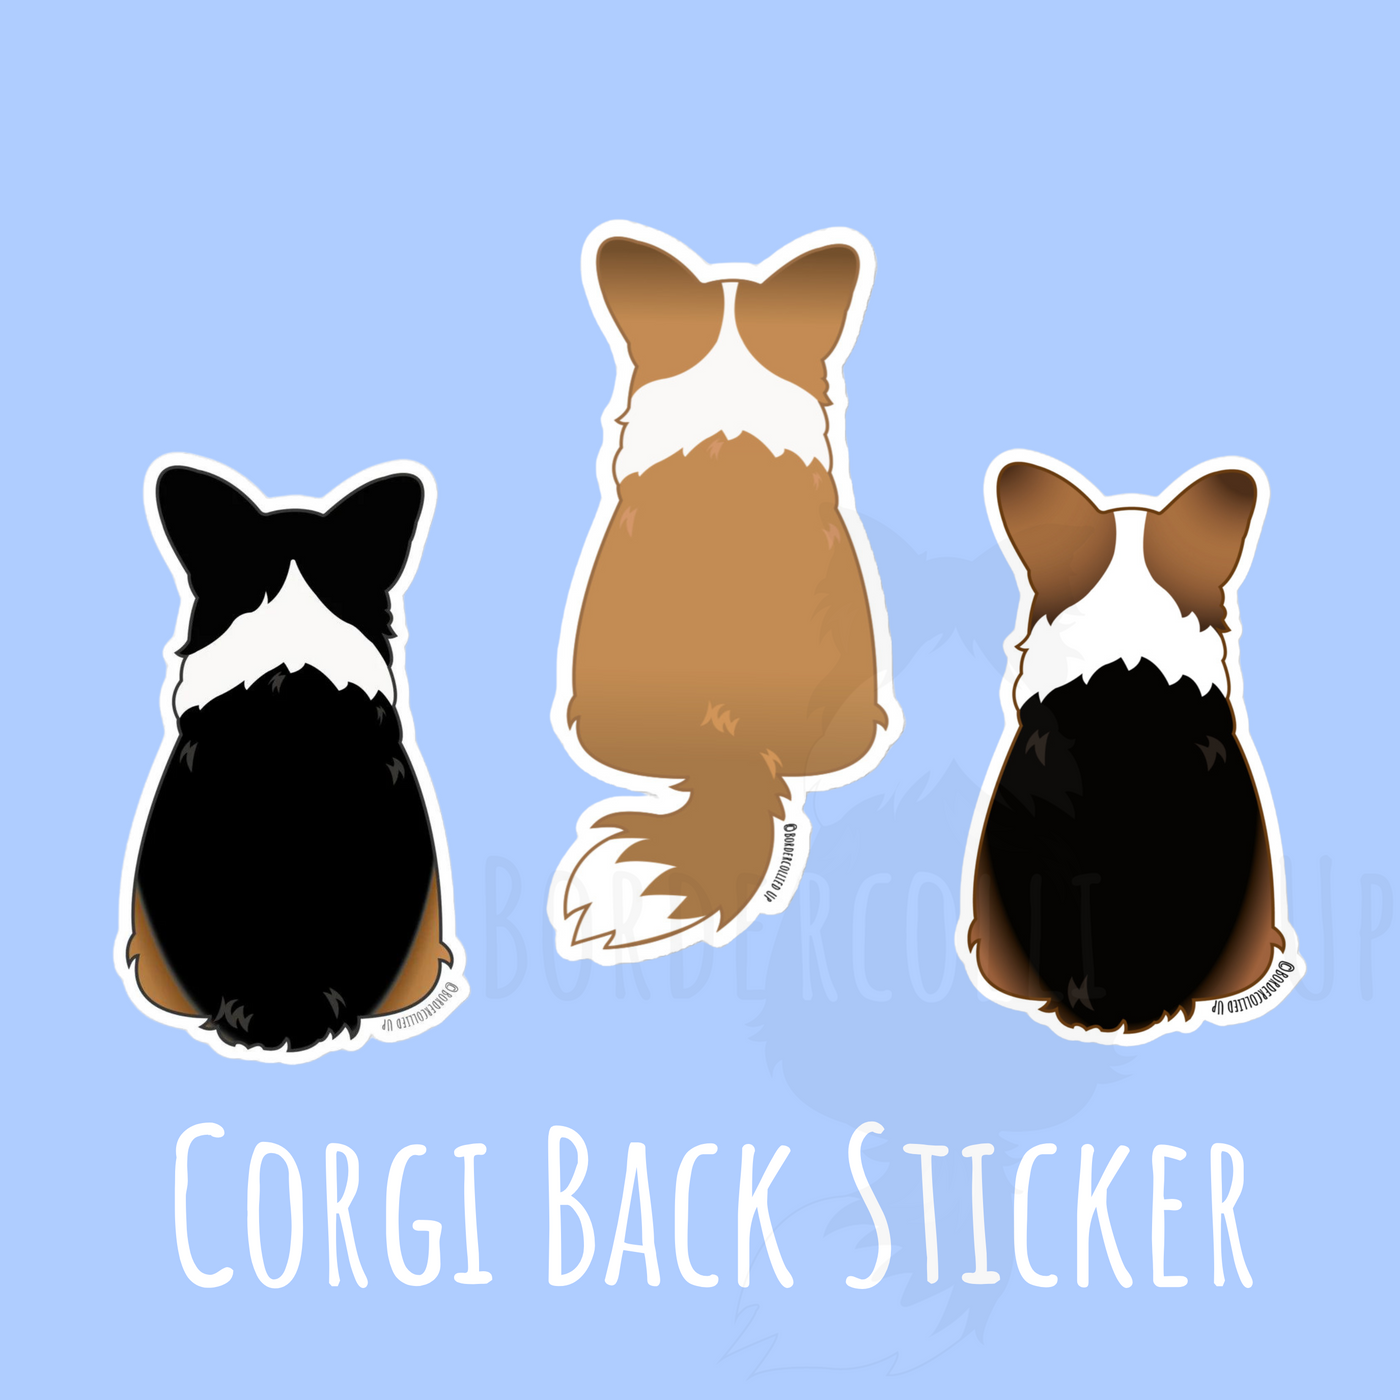 corgi sticker for corgi lovers